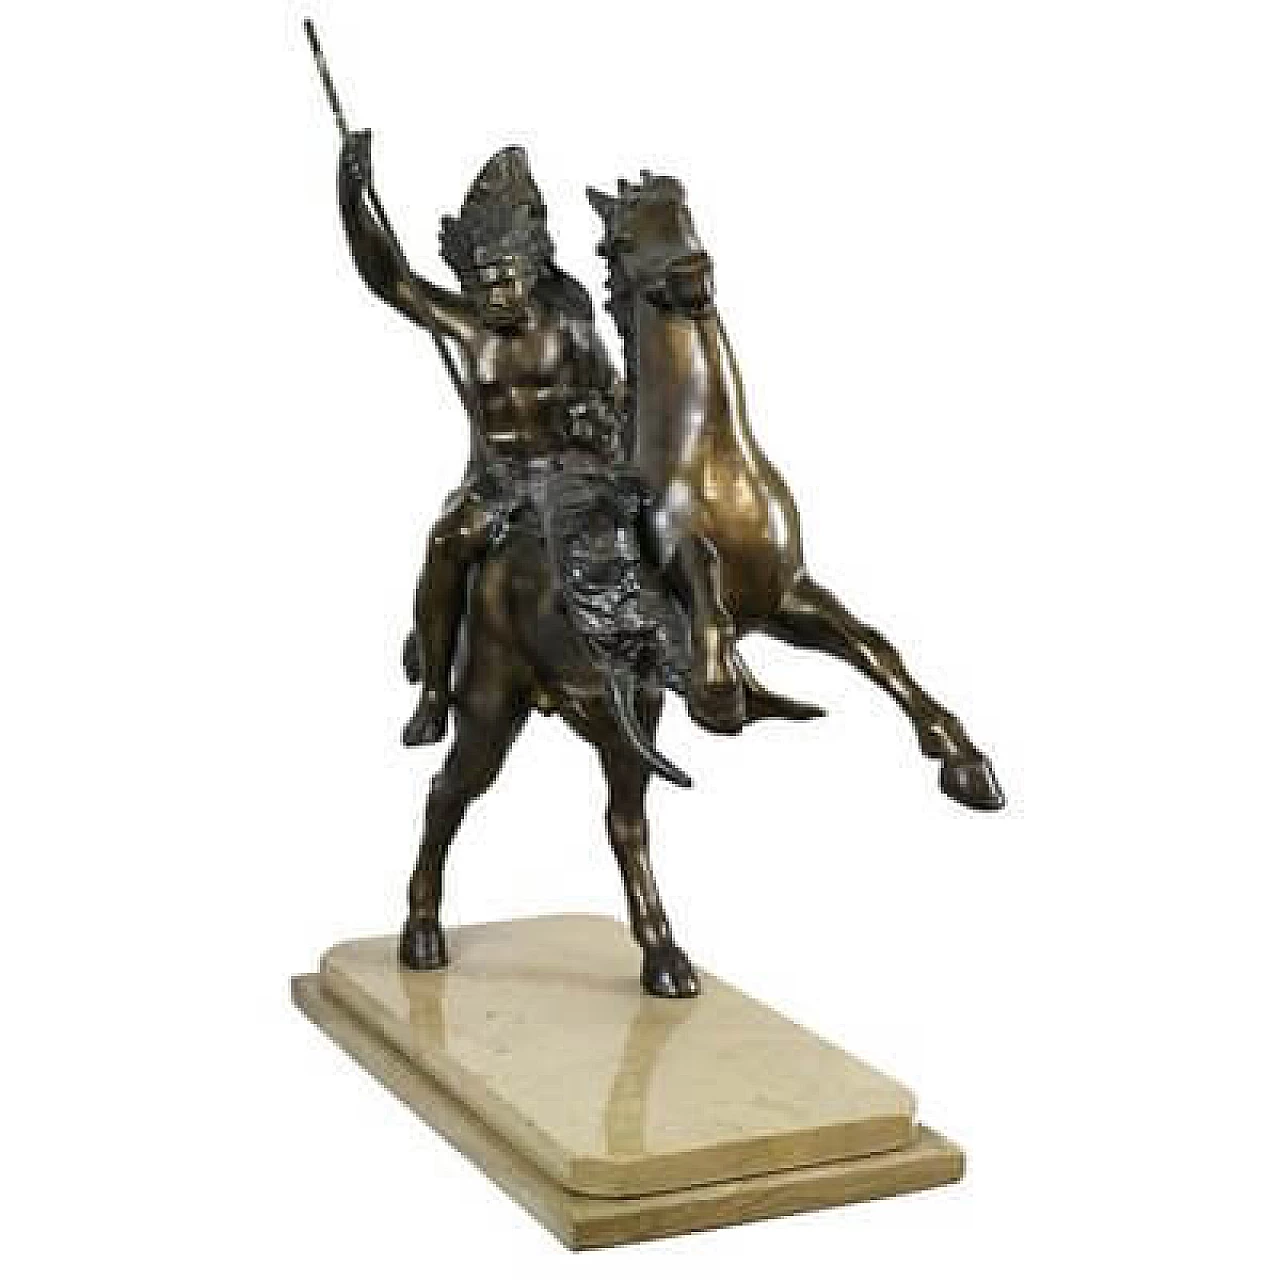 Indian warrior on horseback, reproduction after Tommaso Campajola, bronze sculpture 2